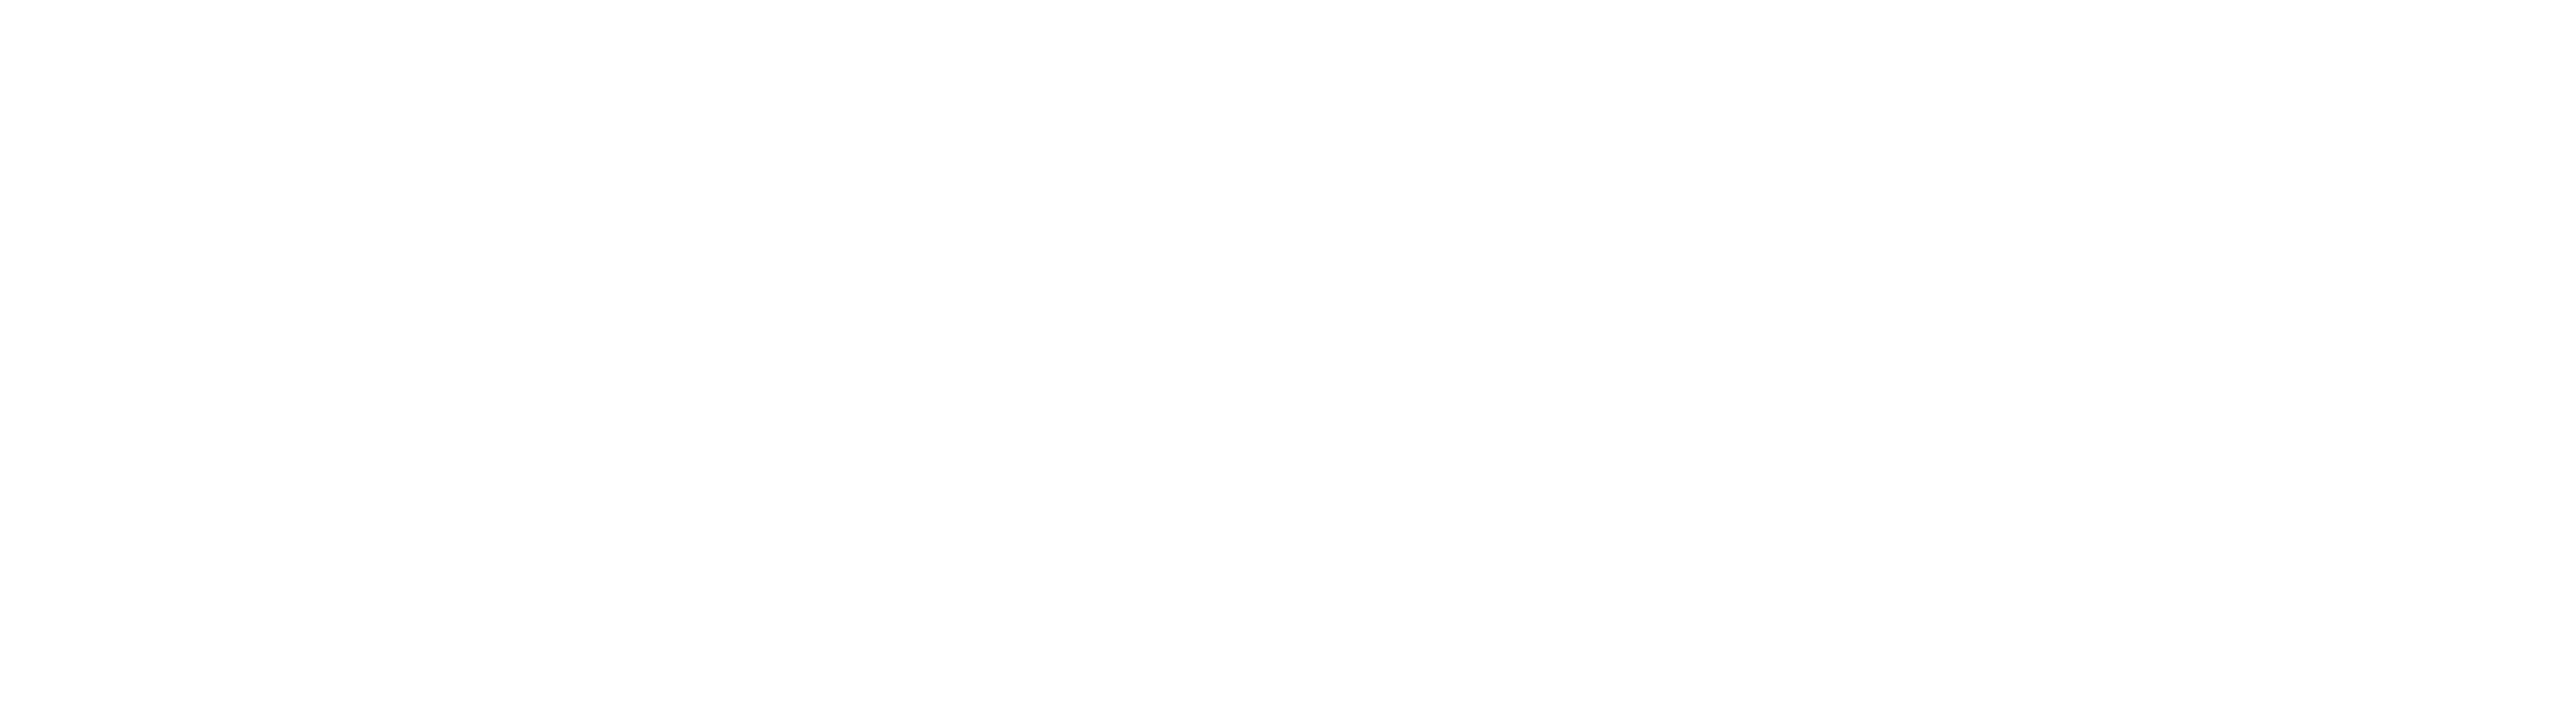 MPU-Basias-Logo.png